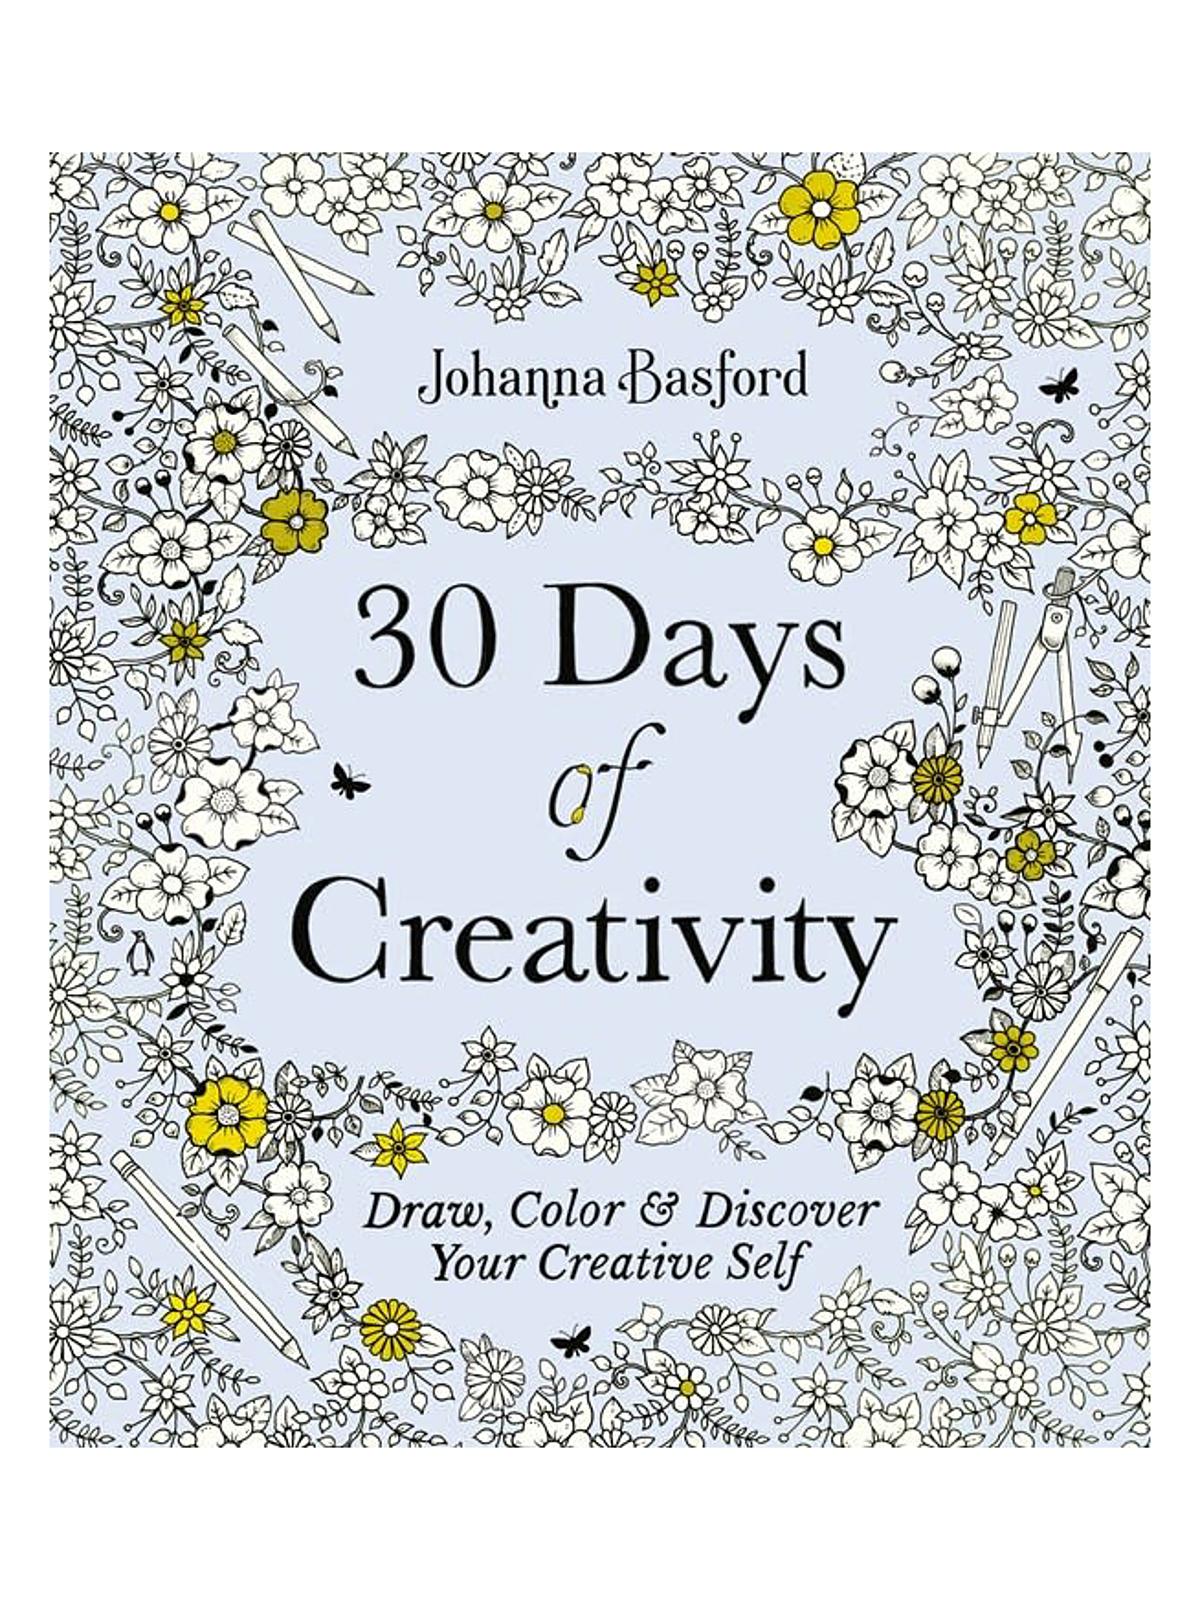 Penguin 30 Days of Creativity